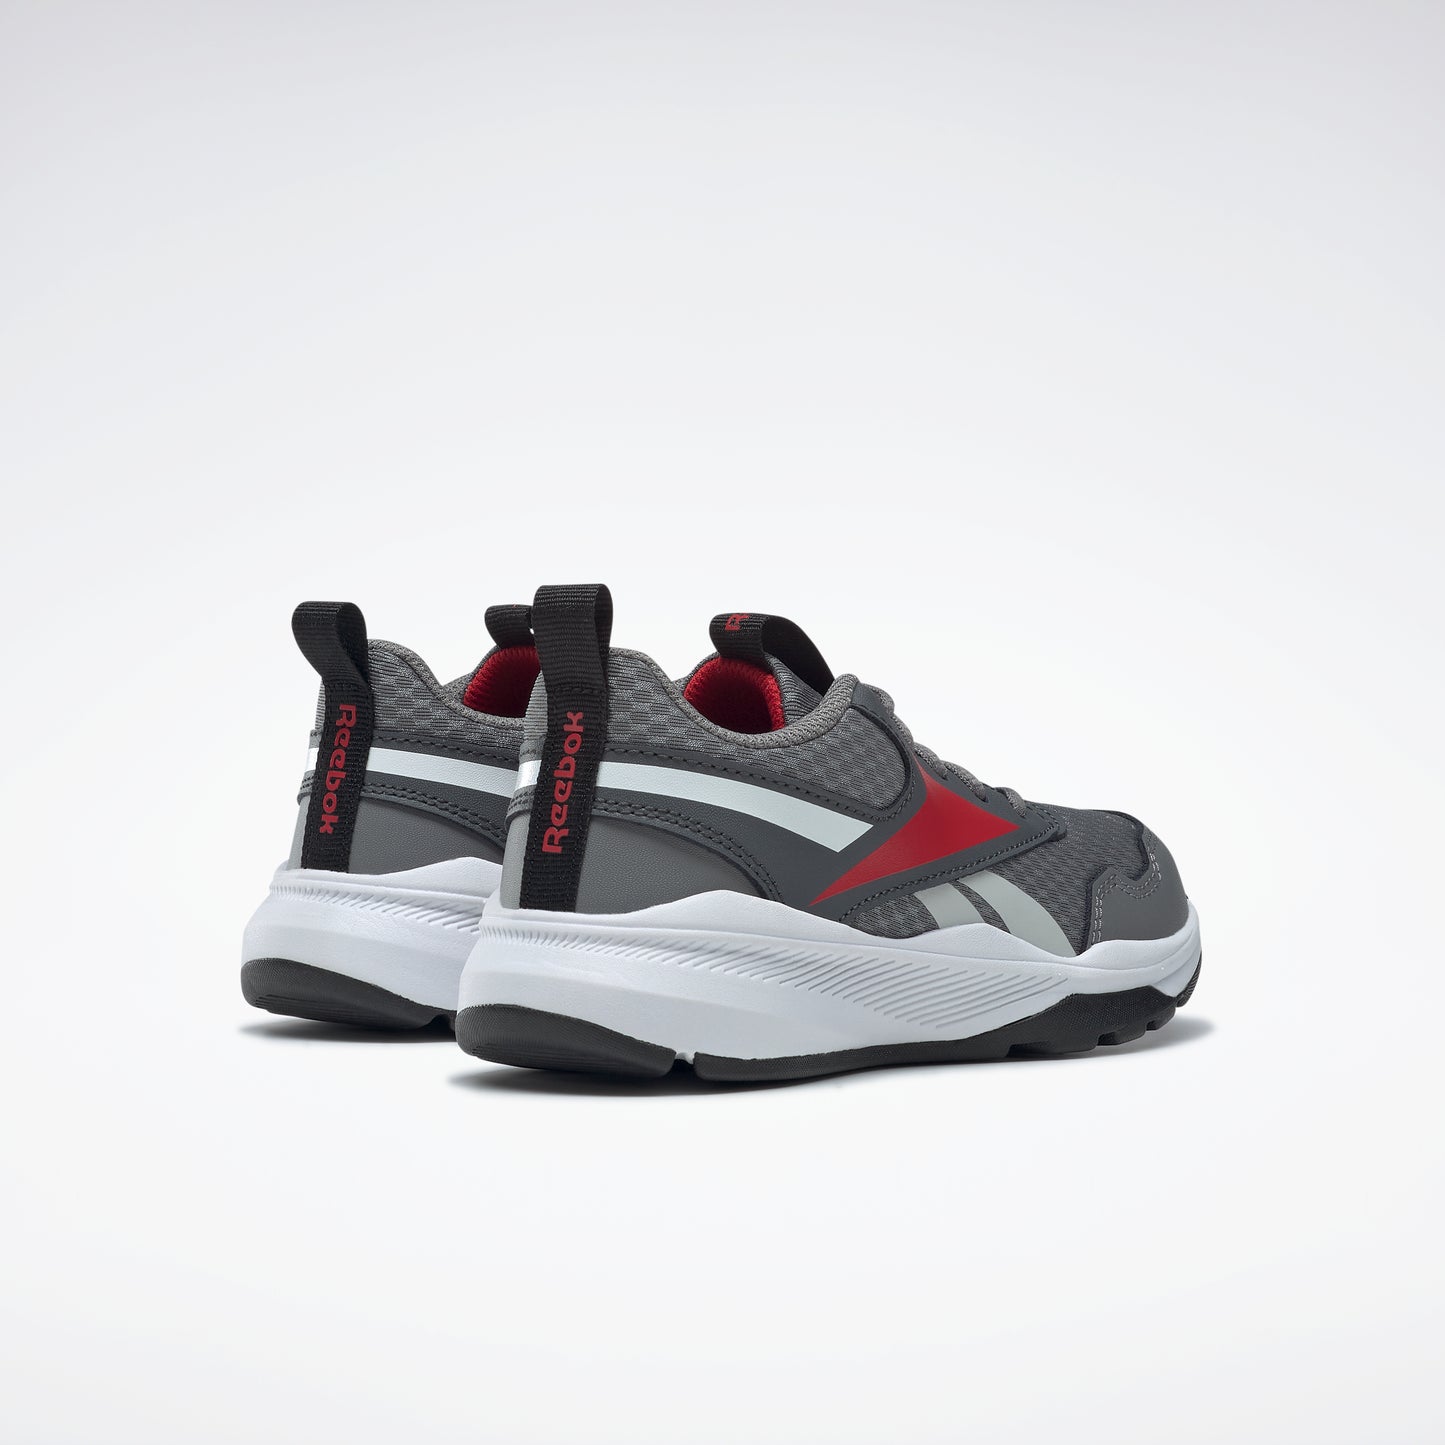 Reebok Footwear Kids Reebok Xt Sprinter 2 Shoes Child Pugry6/Purgry/Vecred